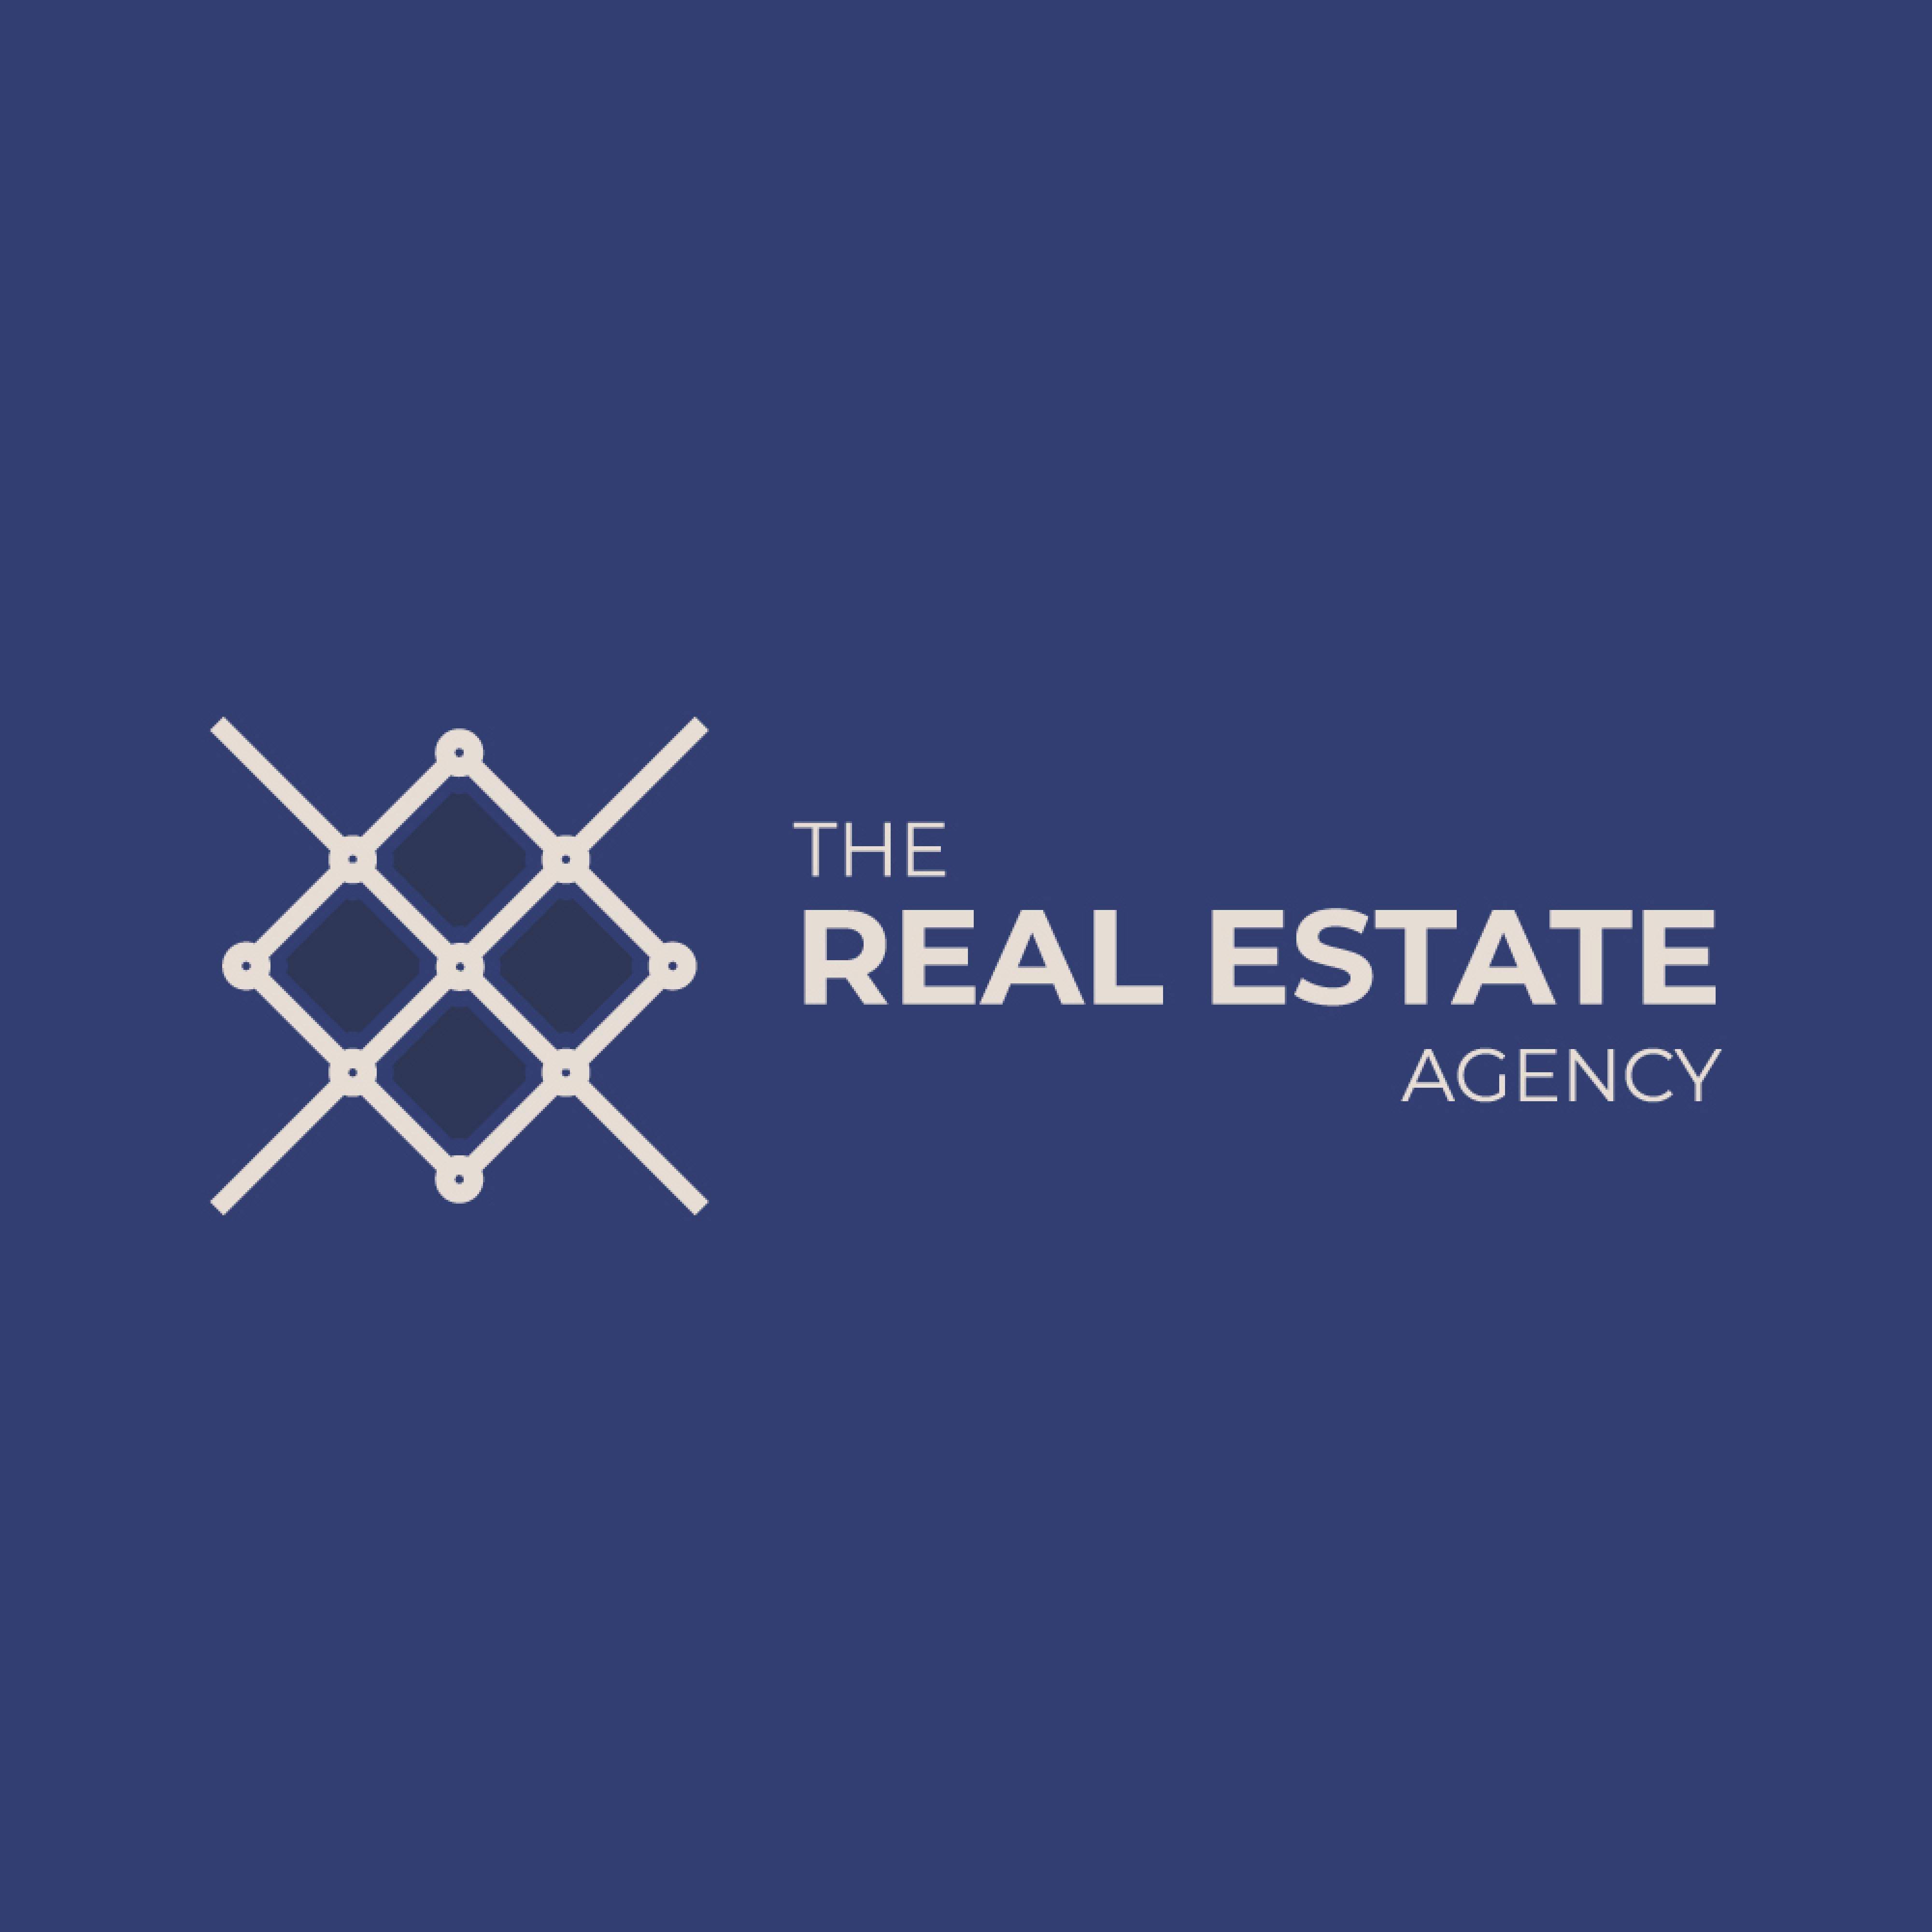 Minimalist real estate agency logo design